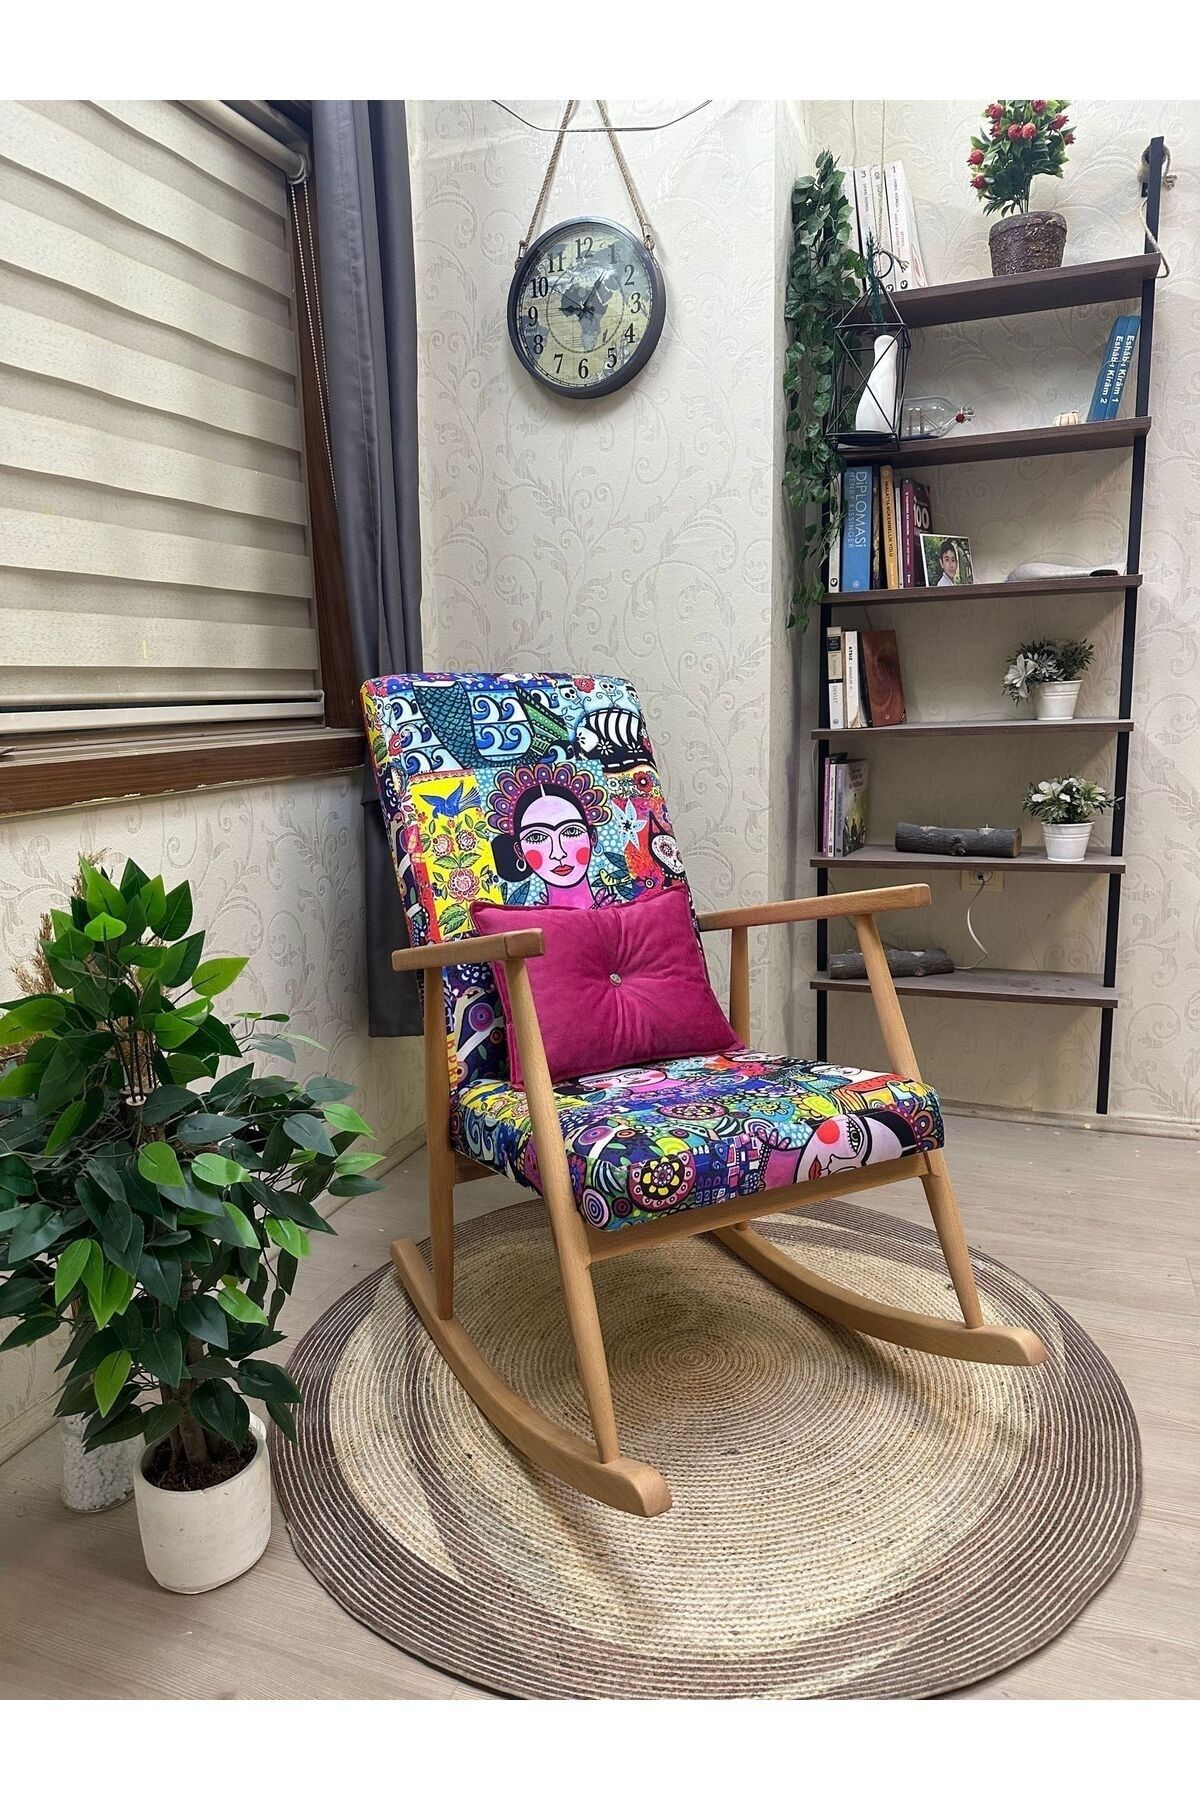 Asedia Trend Naturel Diego Modern Ahşap Sallanan Sandalye Dinlenme Emzirme Baba Tv Okuma Koltuğu Berjer